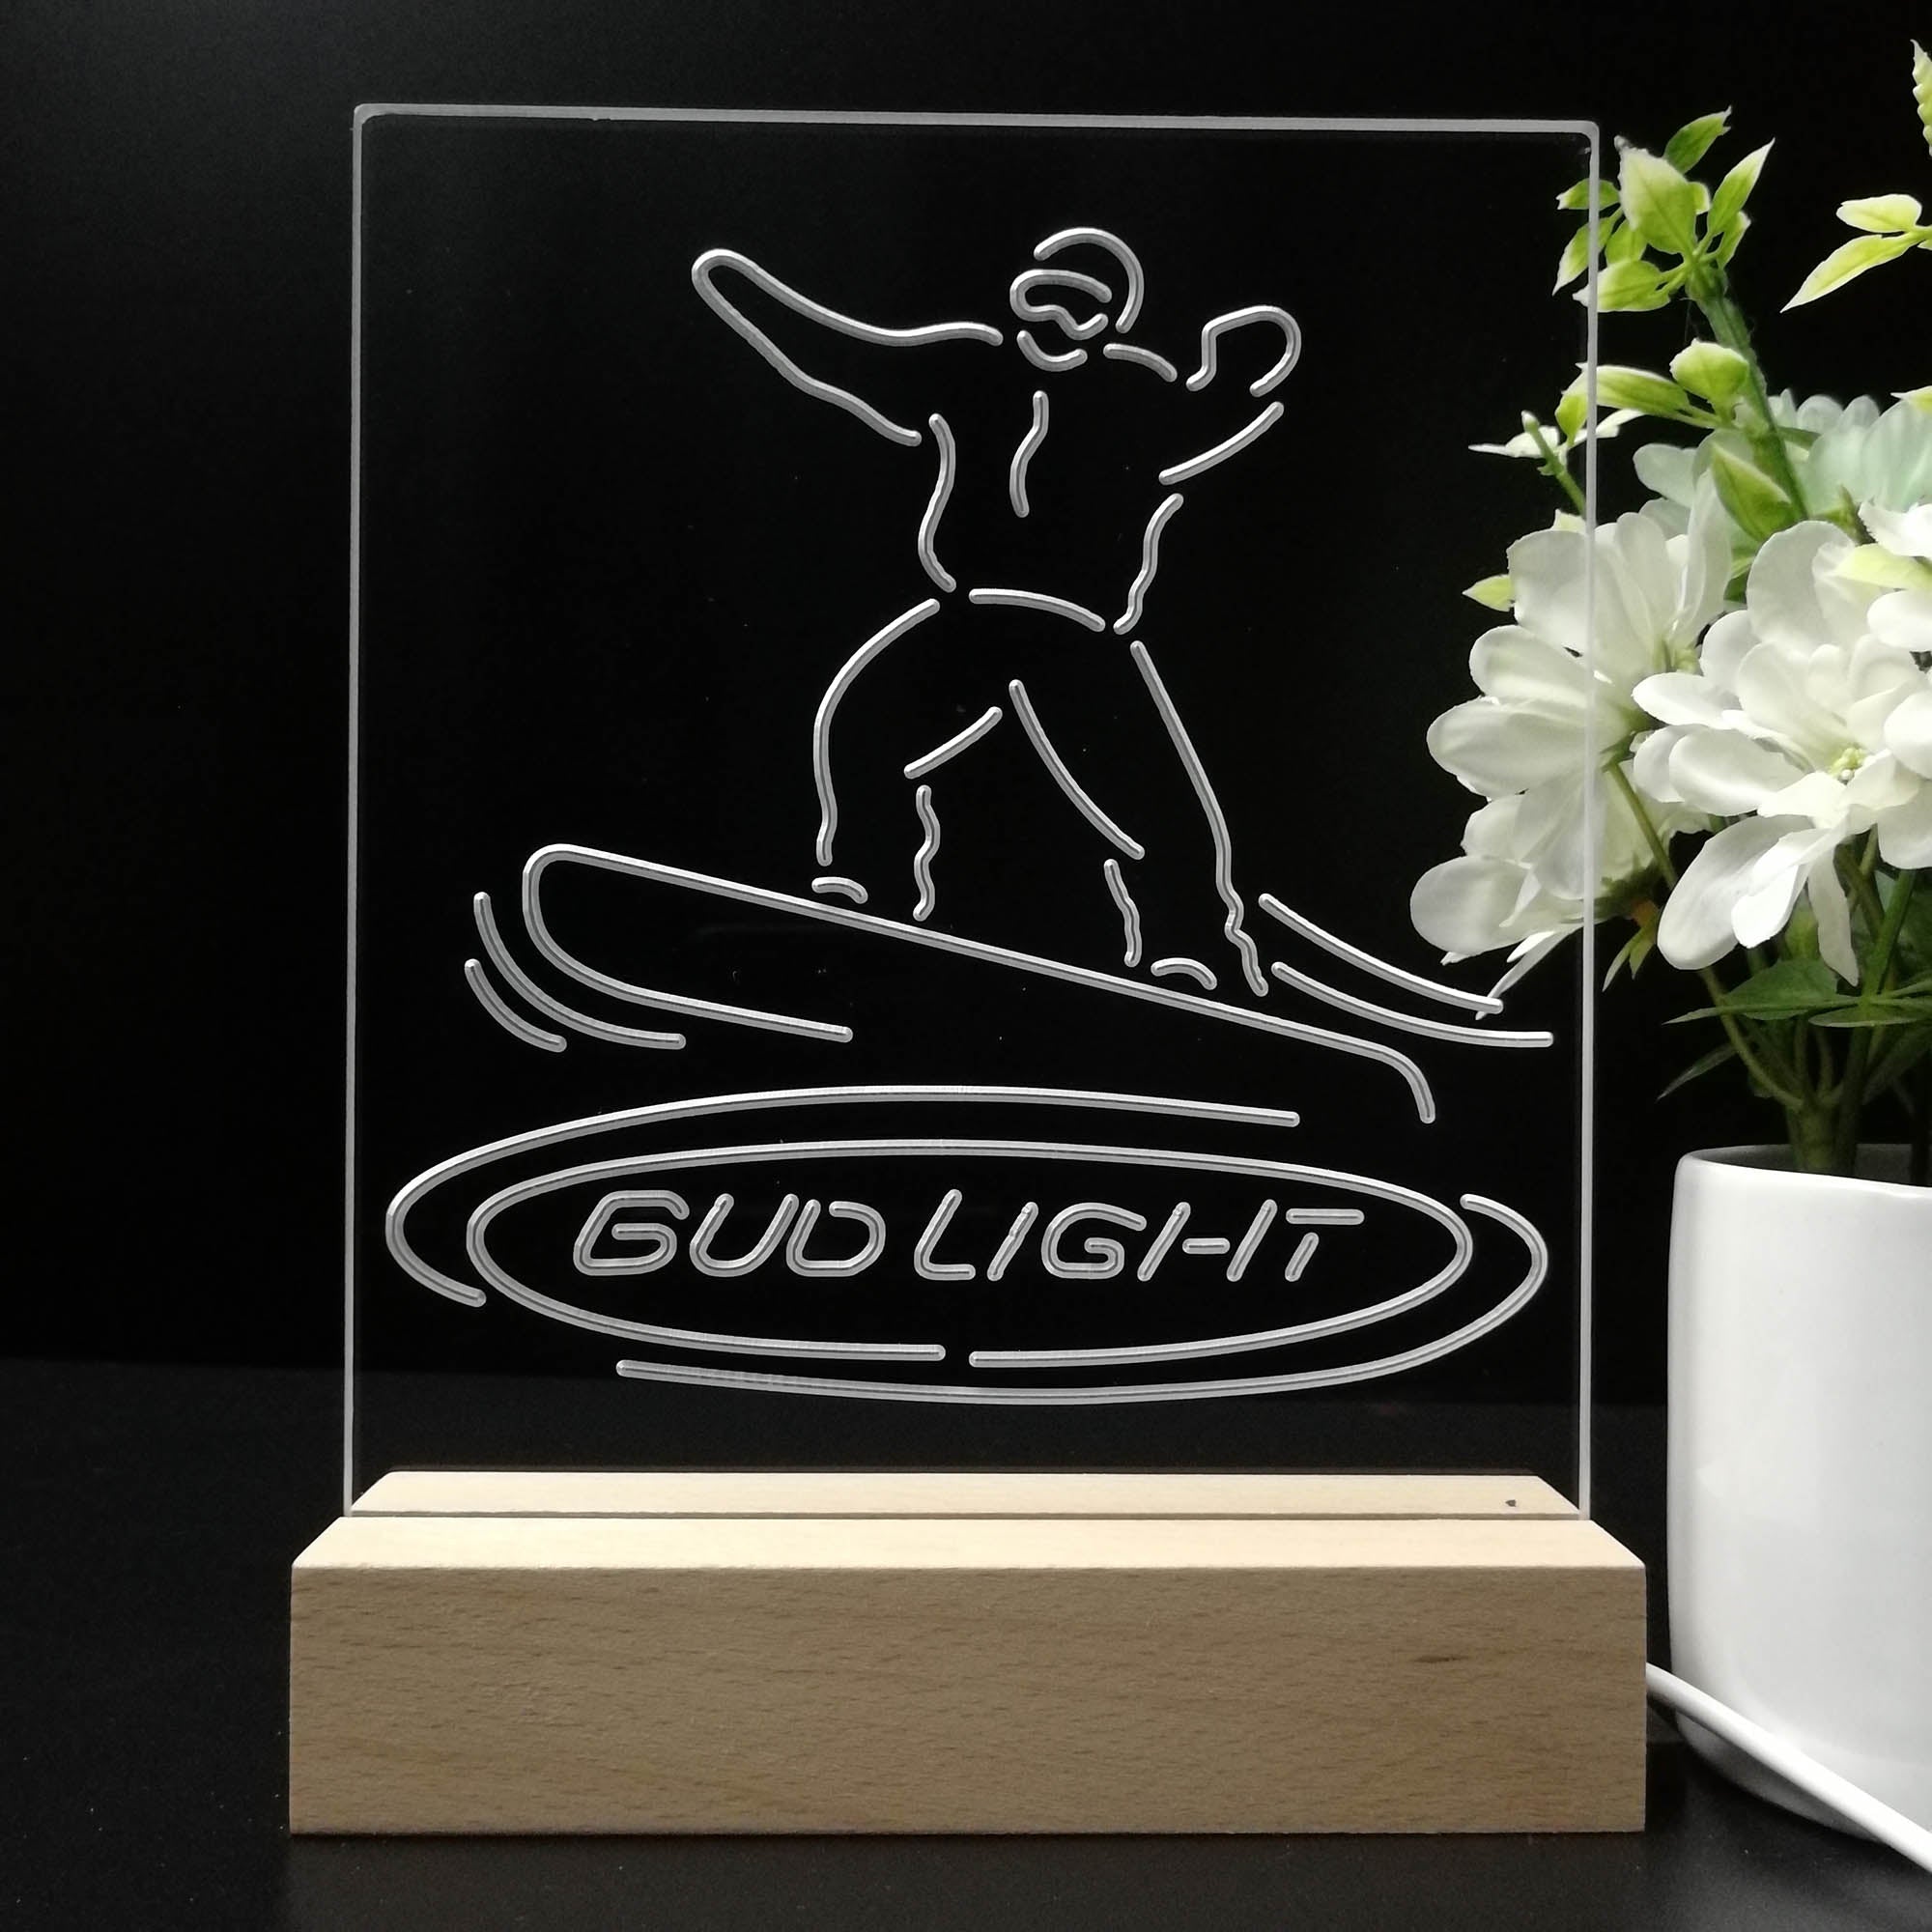 Bud Light Snowboarder 3D LED Illusion Night Light Table Lamp